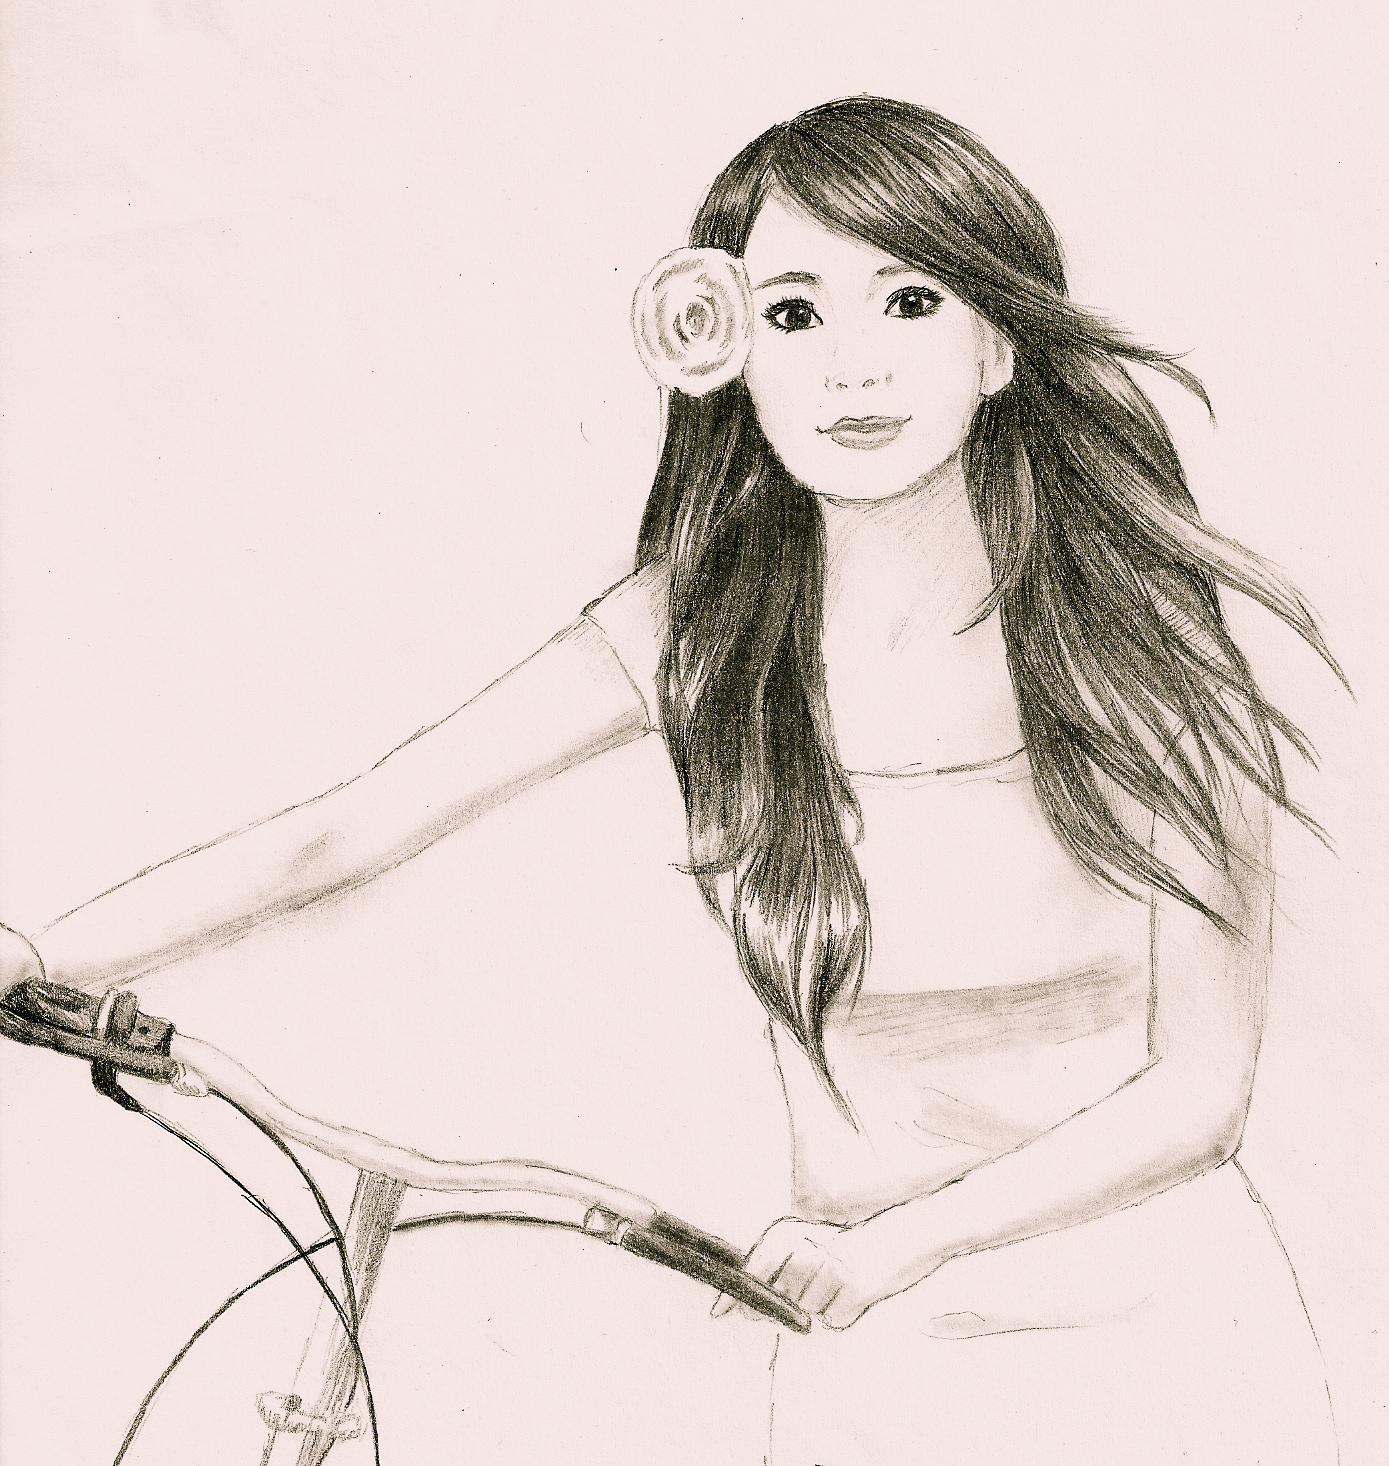 Bike by Fumie716